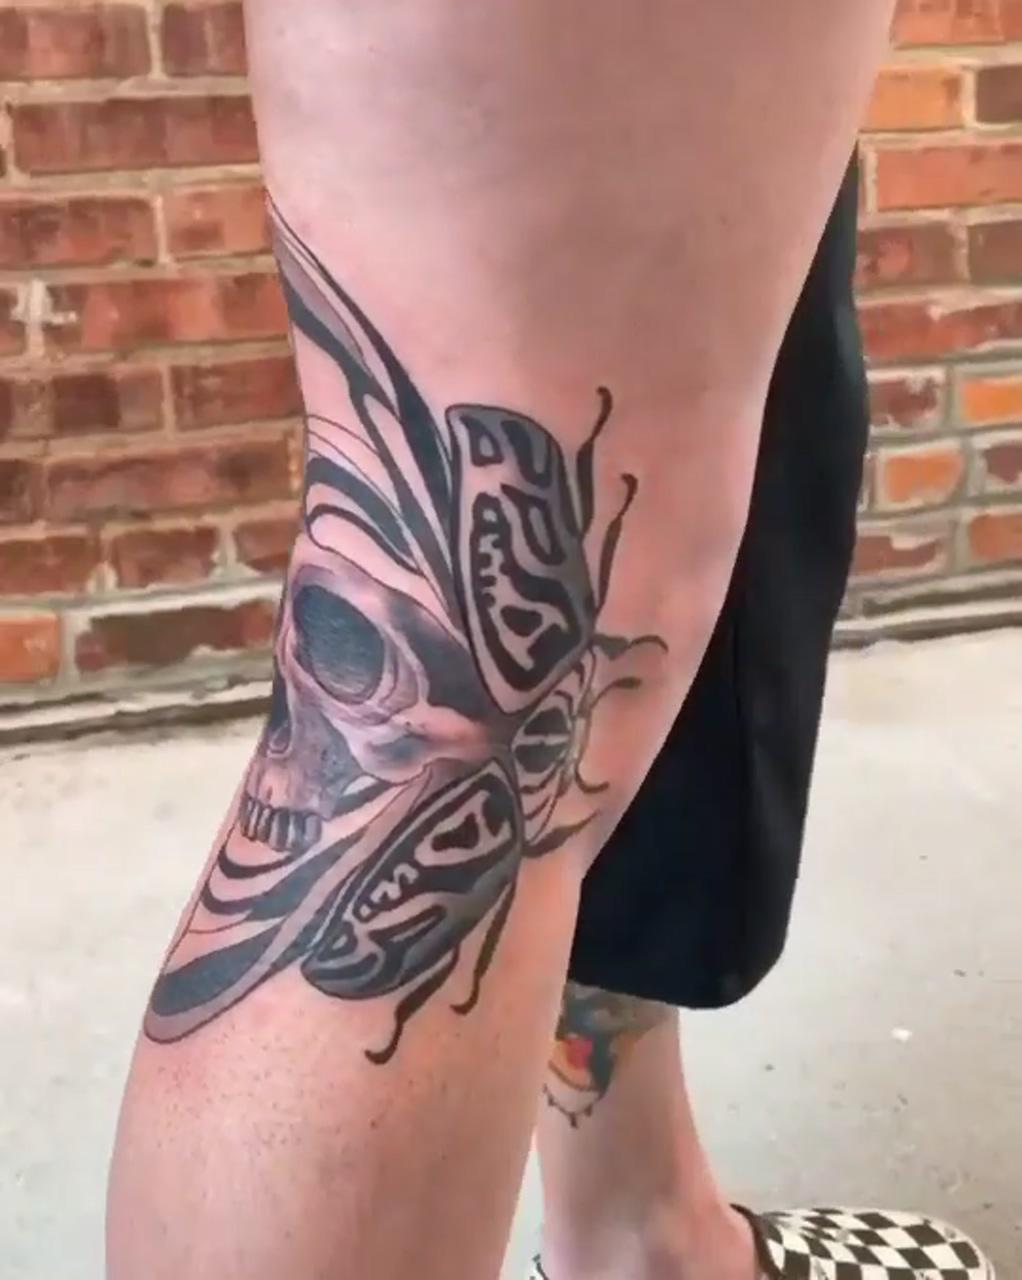 Tattoos videos; tattoo videos